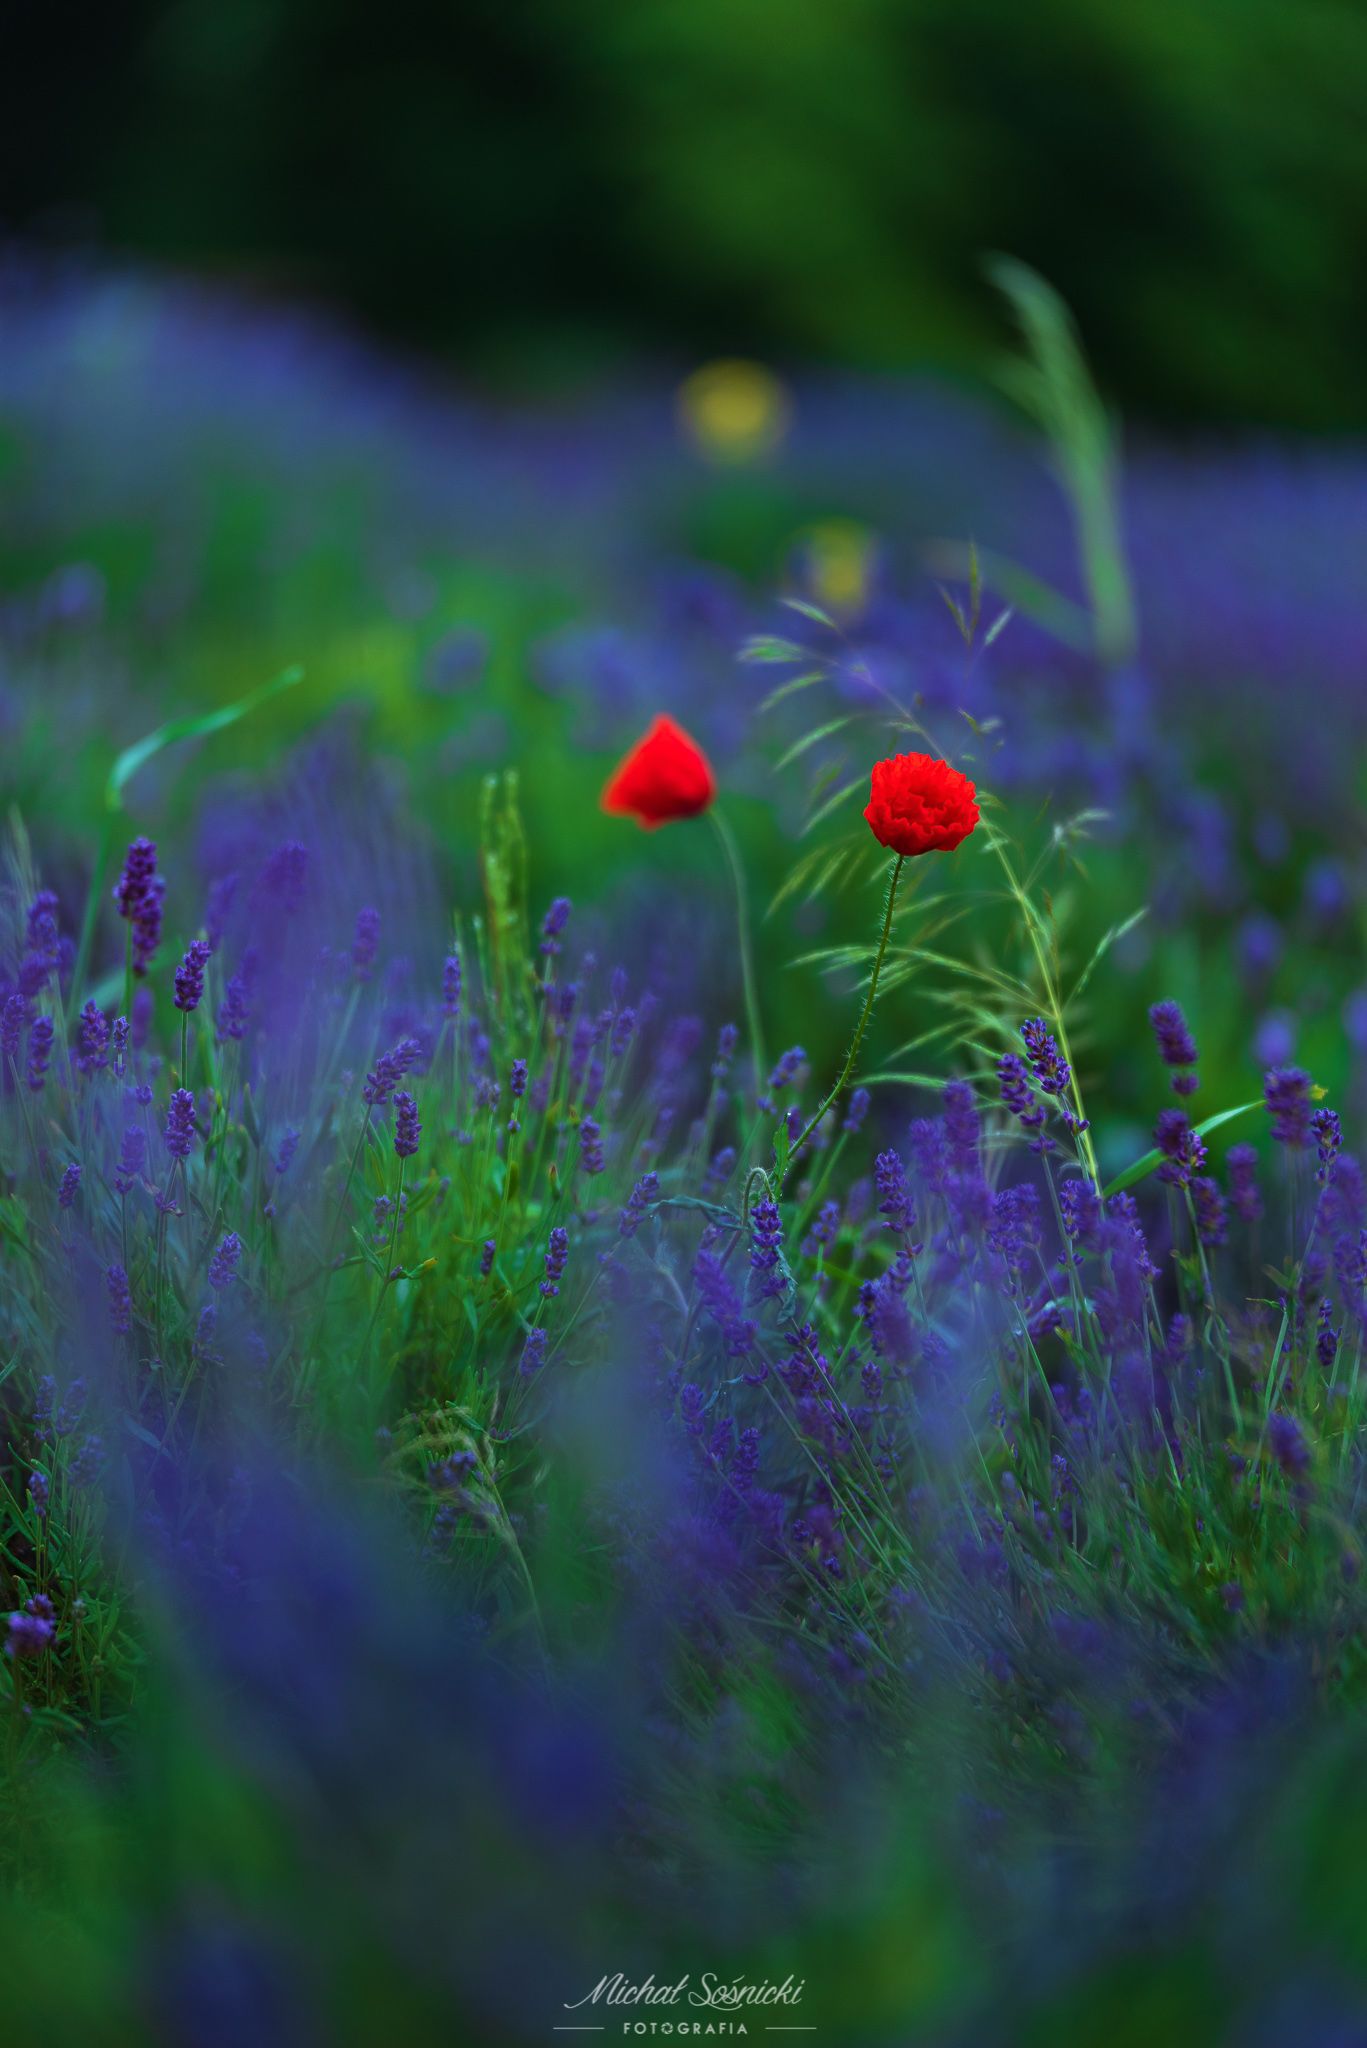 #poland #lavender #poppy #flowers #nature #summer #pentax, Michał Sośnicki